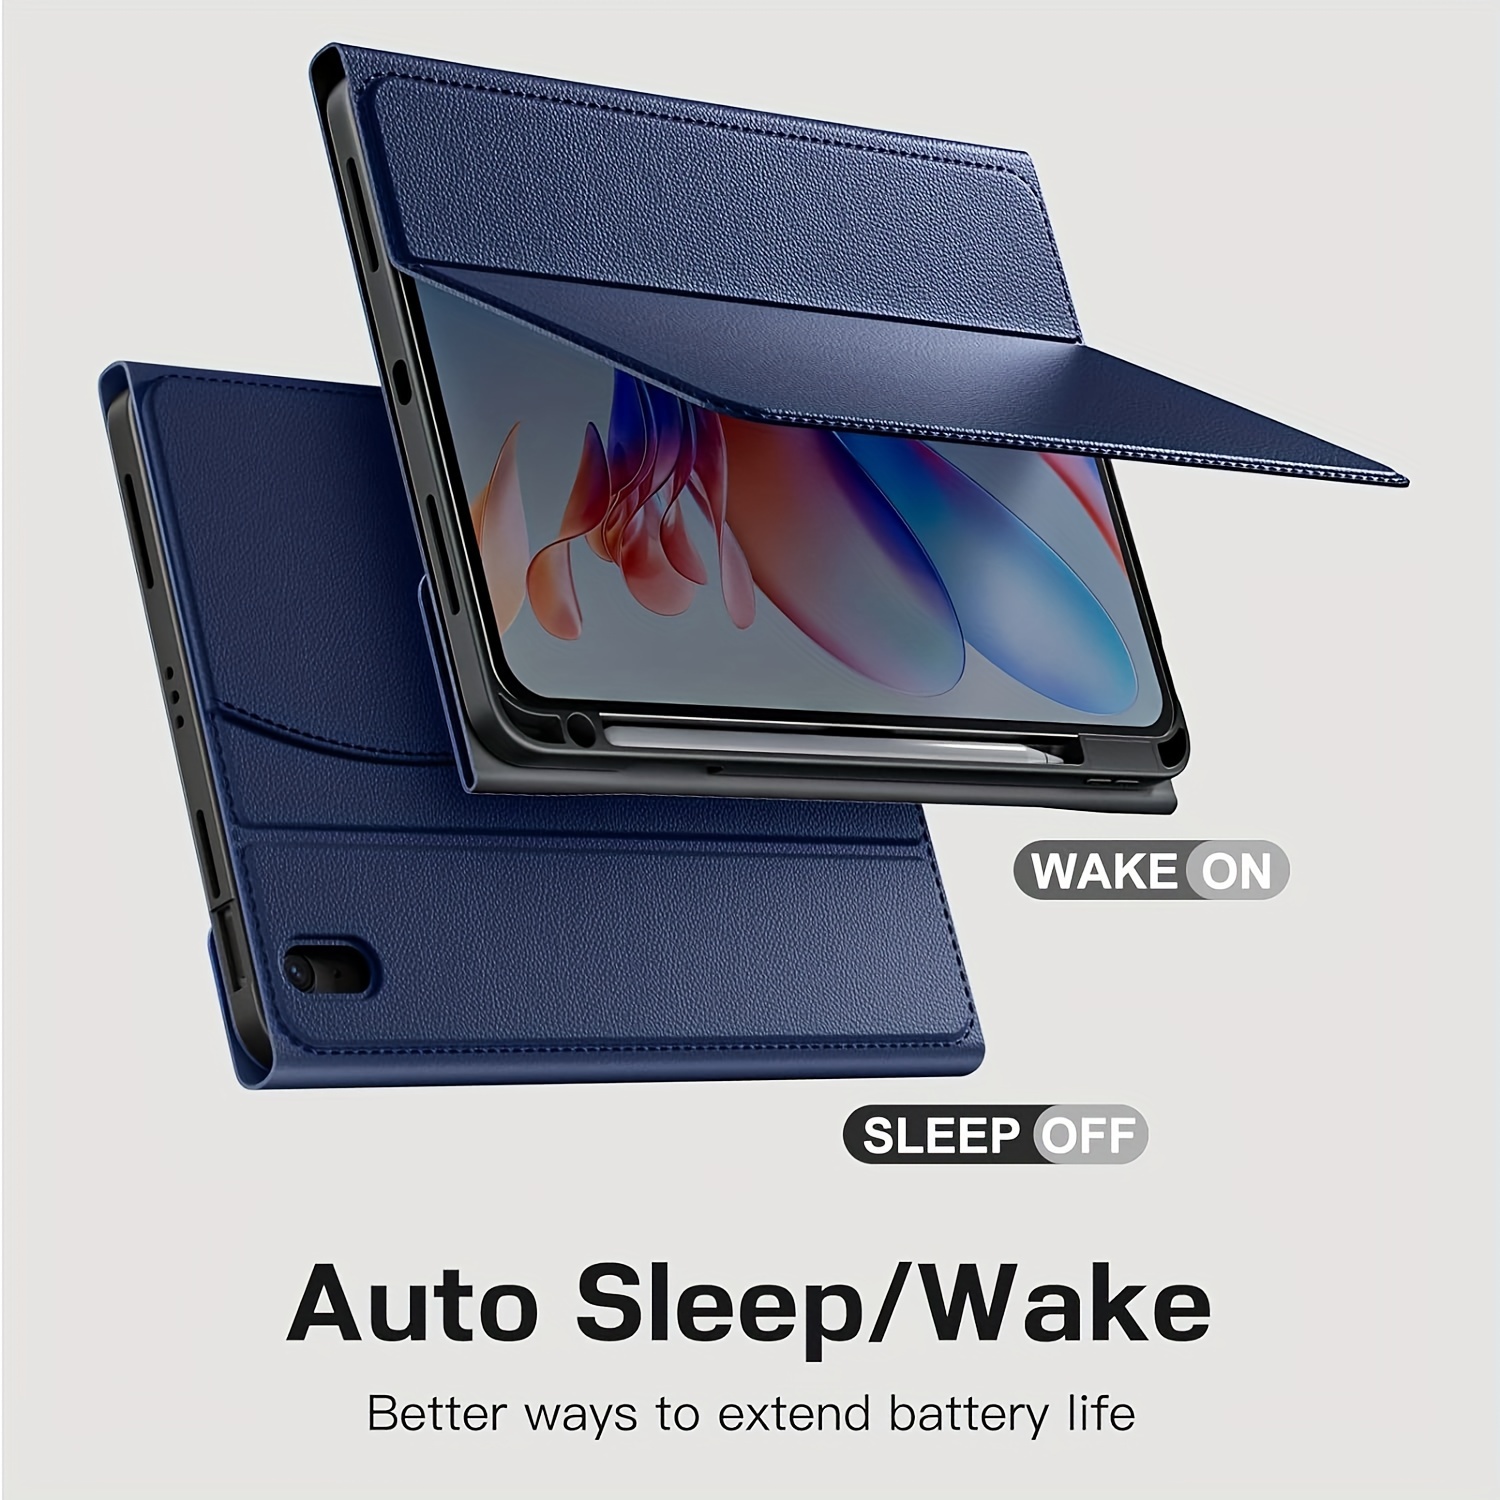 Buy iPad Air 4 Case 10.9 iPad Air 4th Generation 2020 Leather